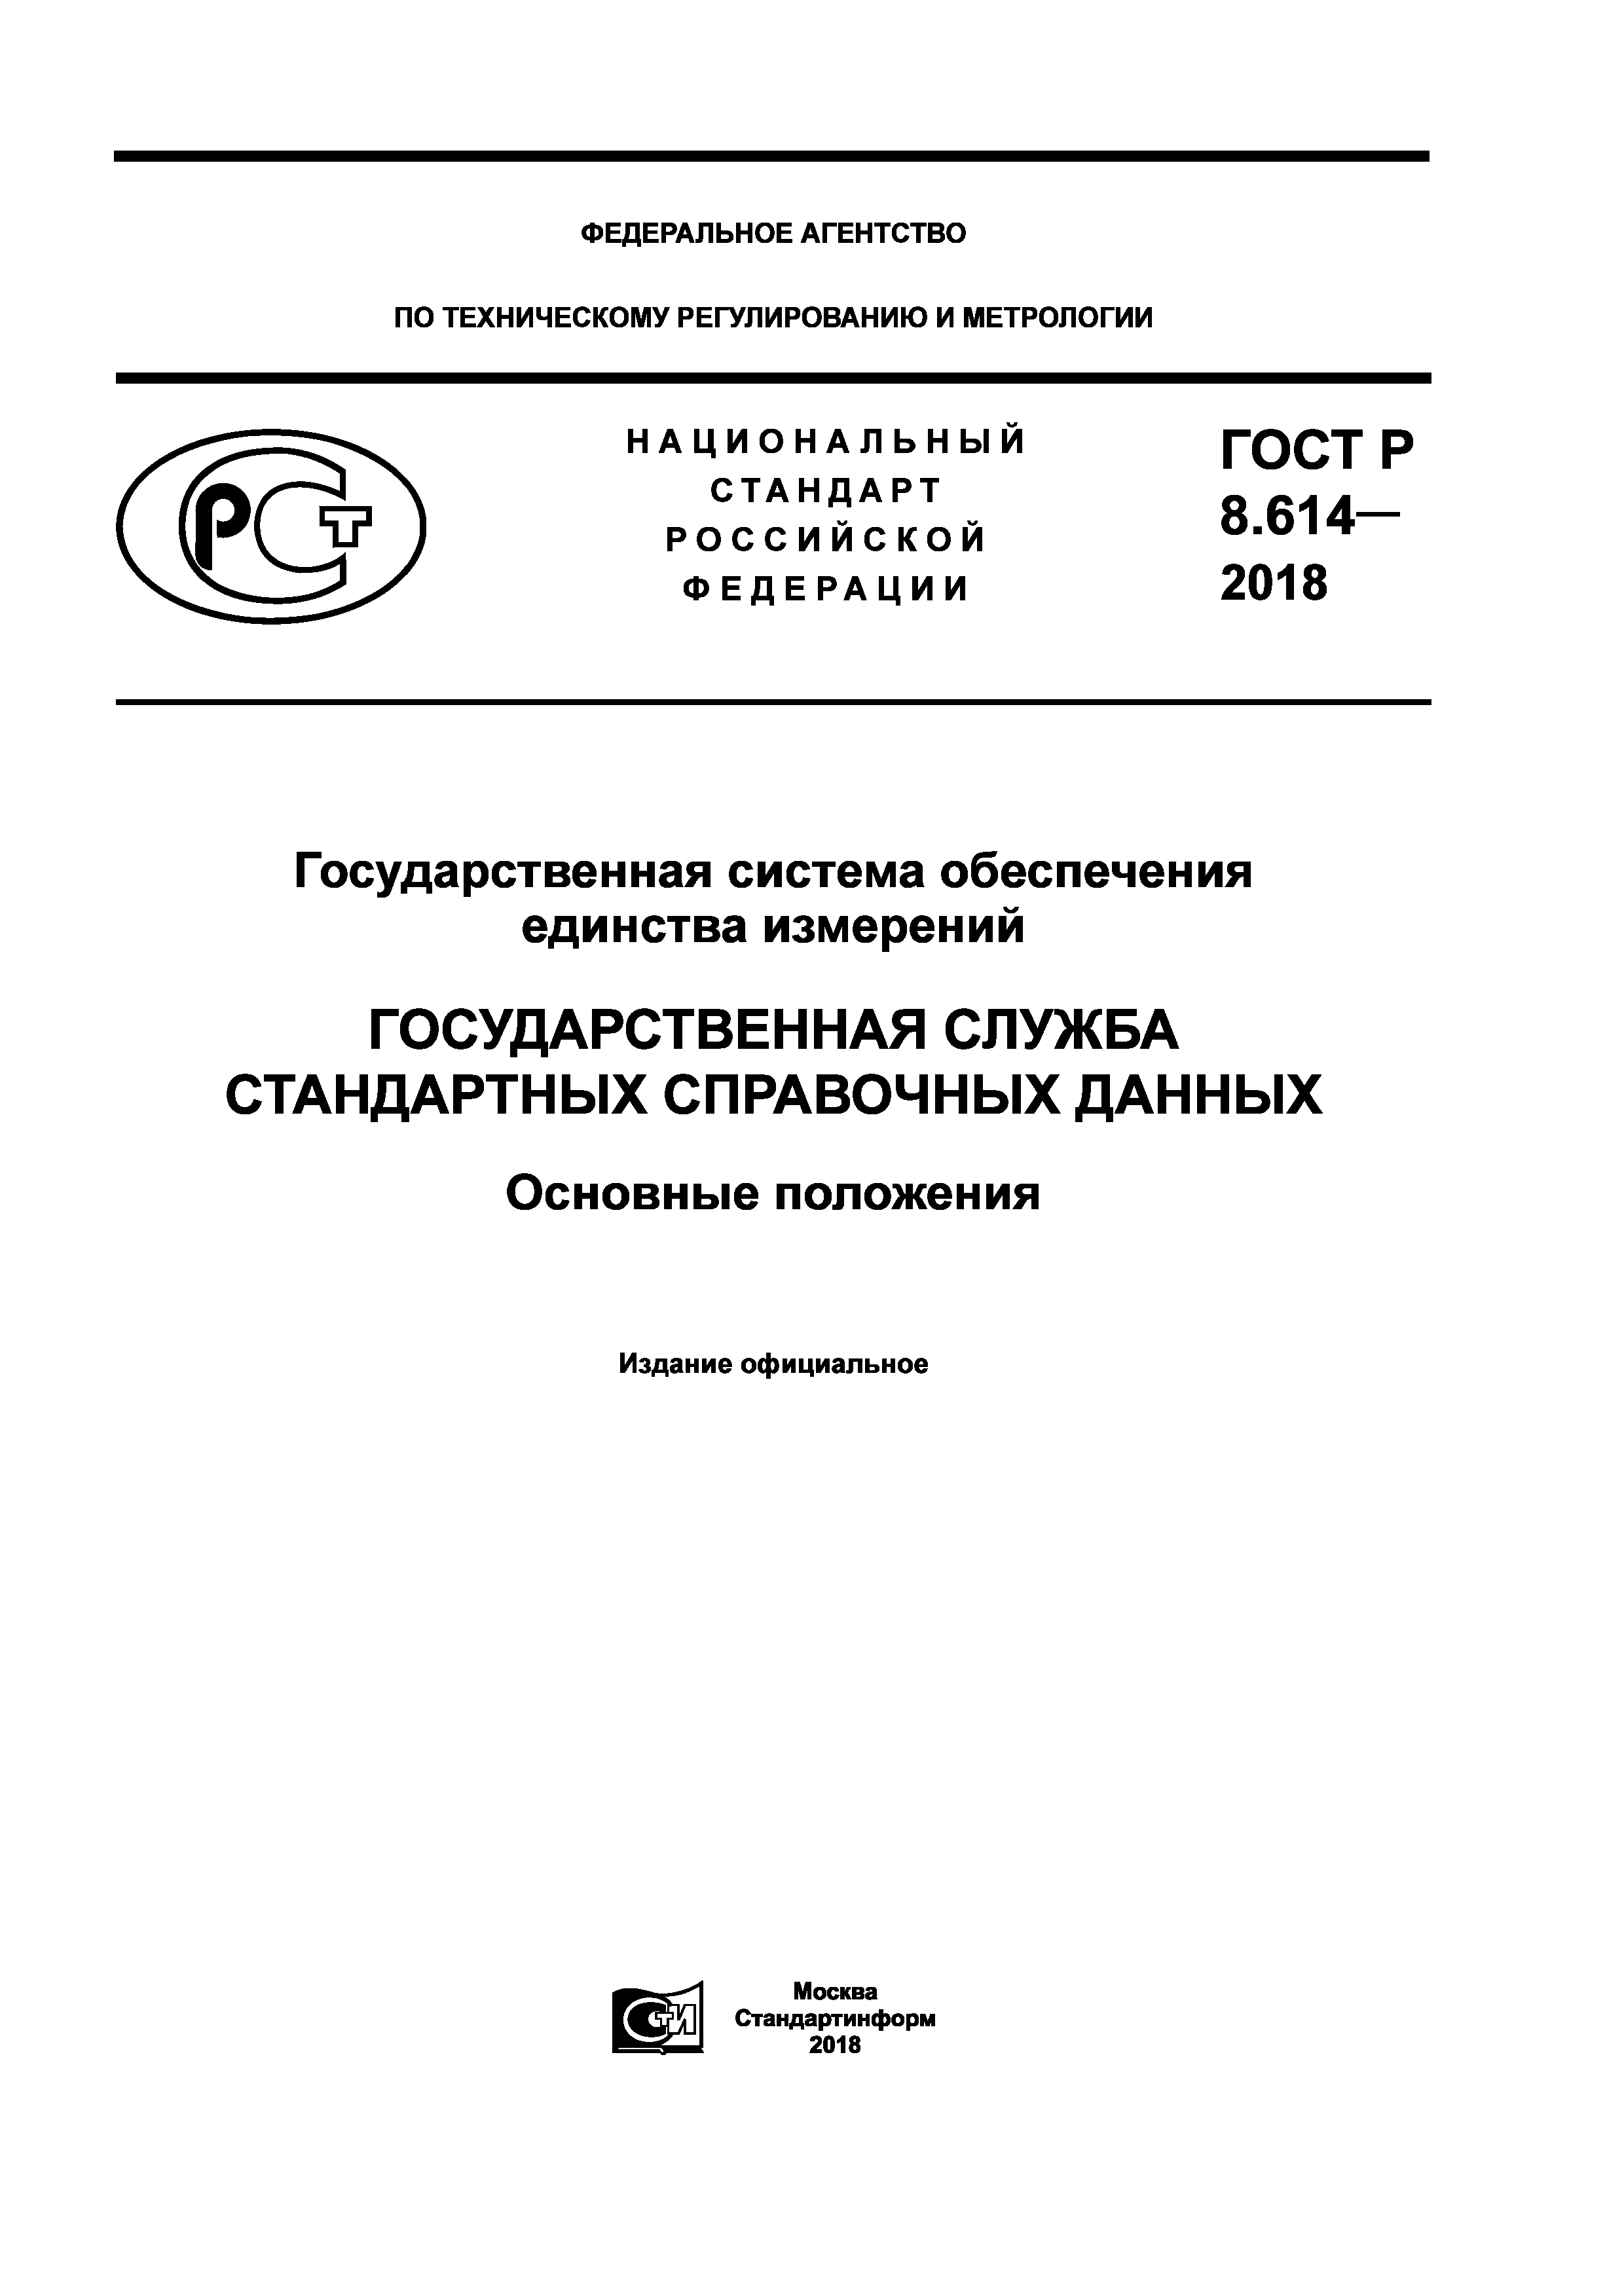 ГОСТ Р 8.614-2018